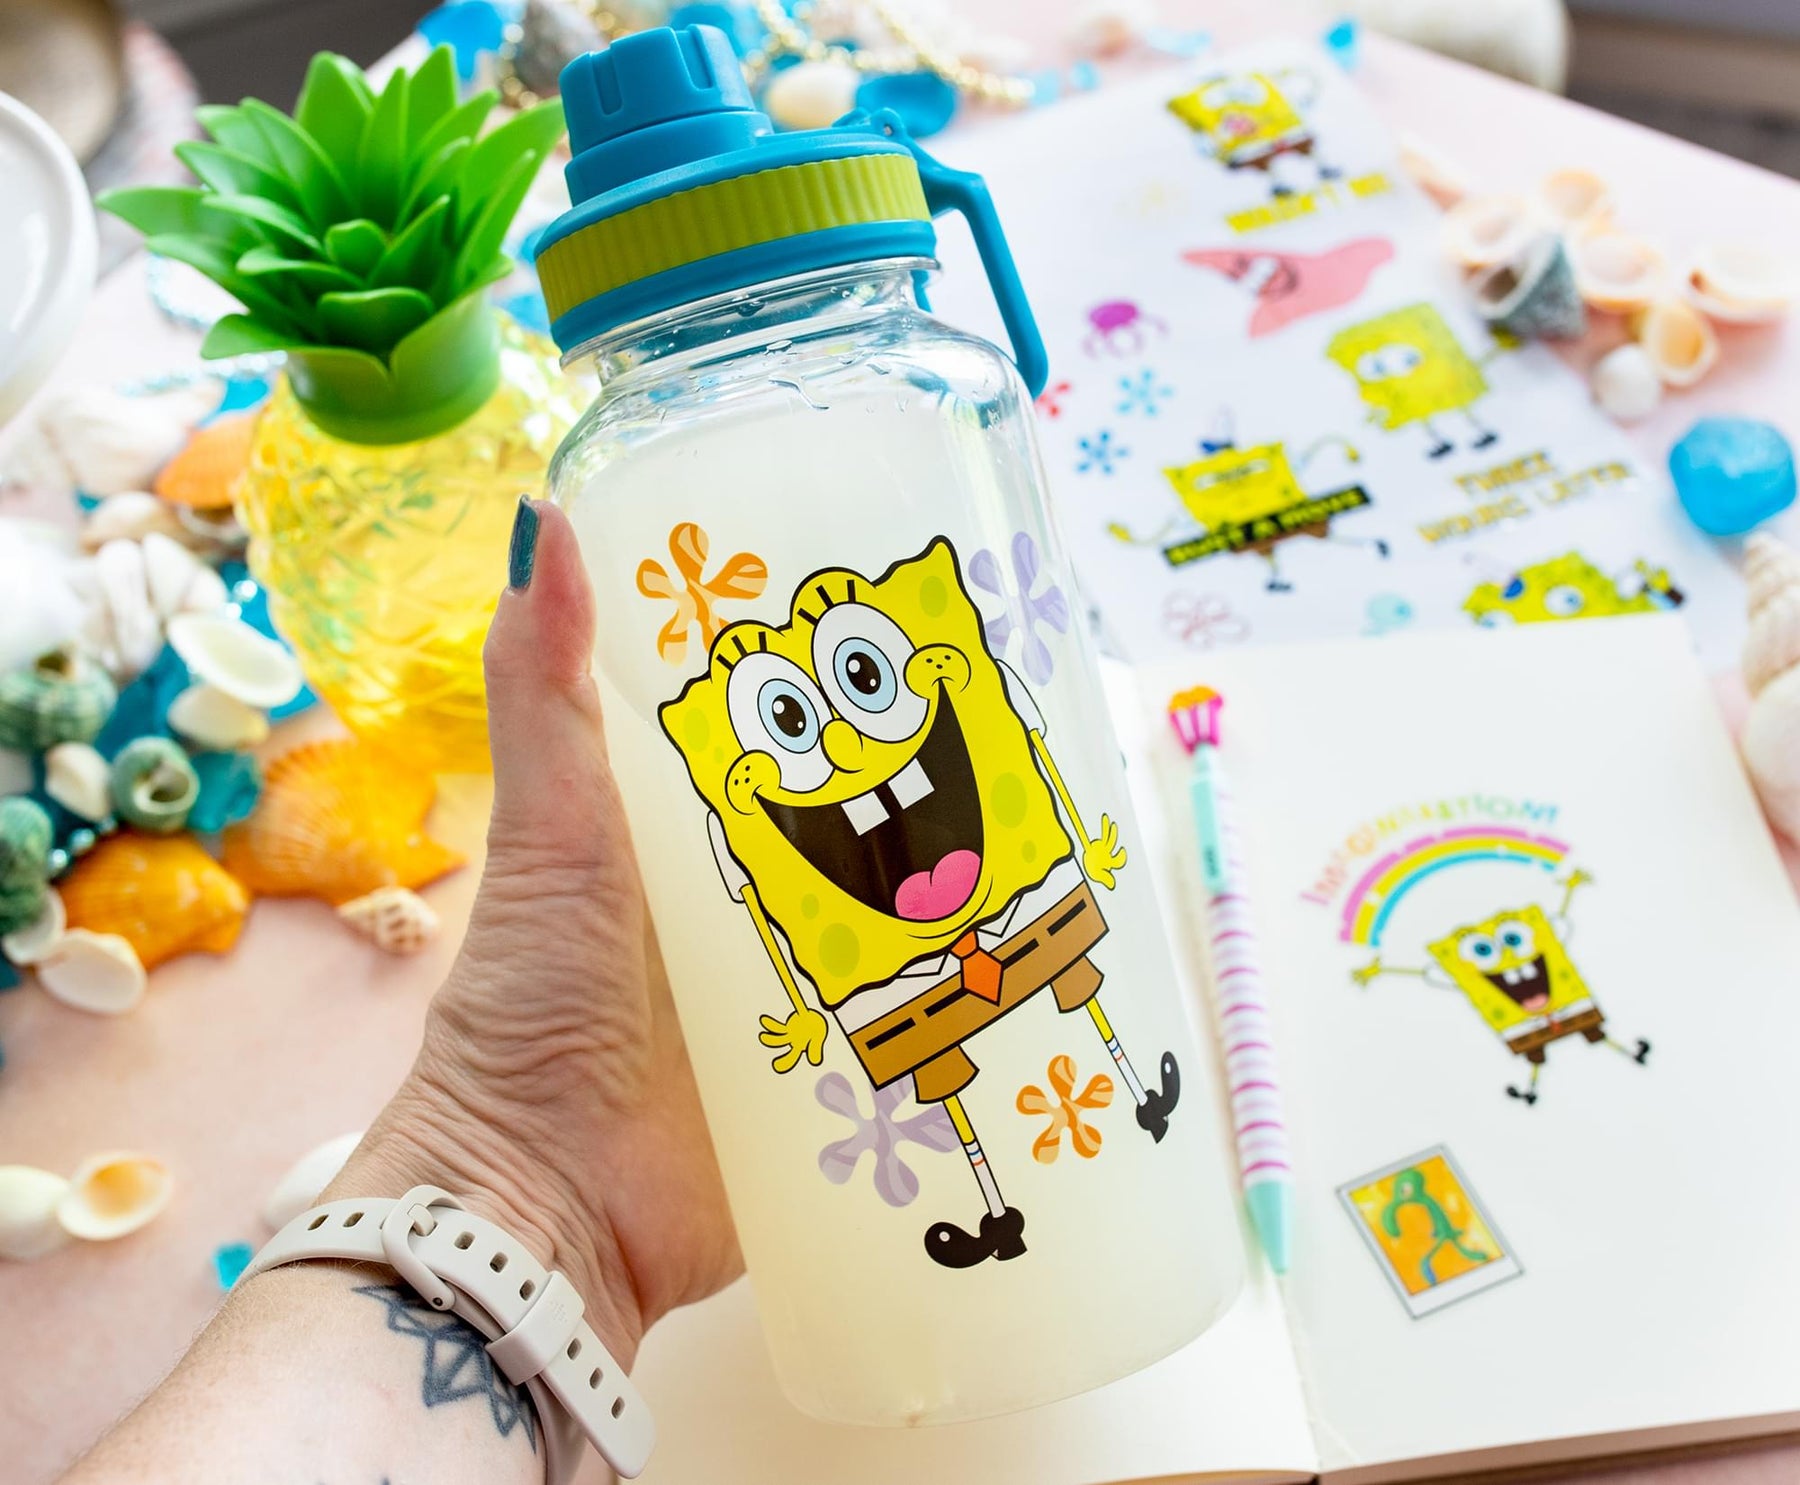 Funny Scenes SpongeBob SquarePants Water Bottle - 32 oz.